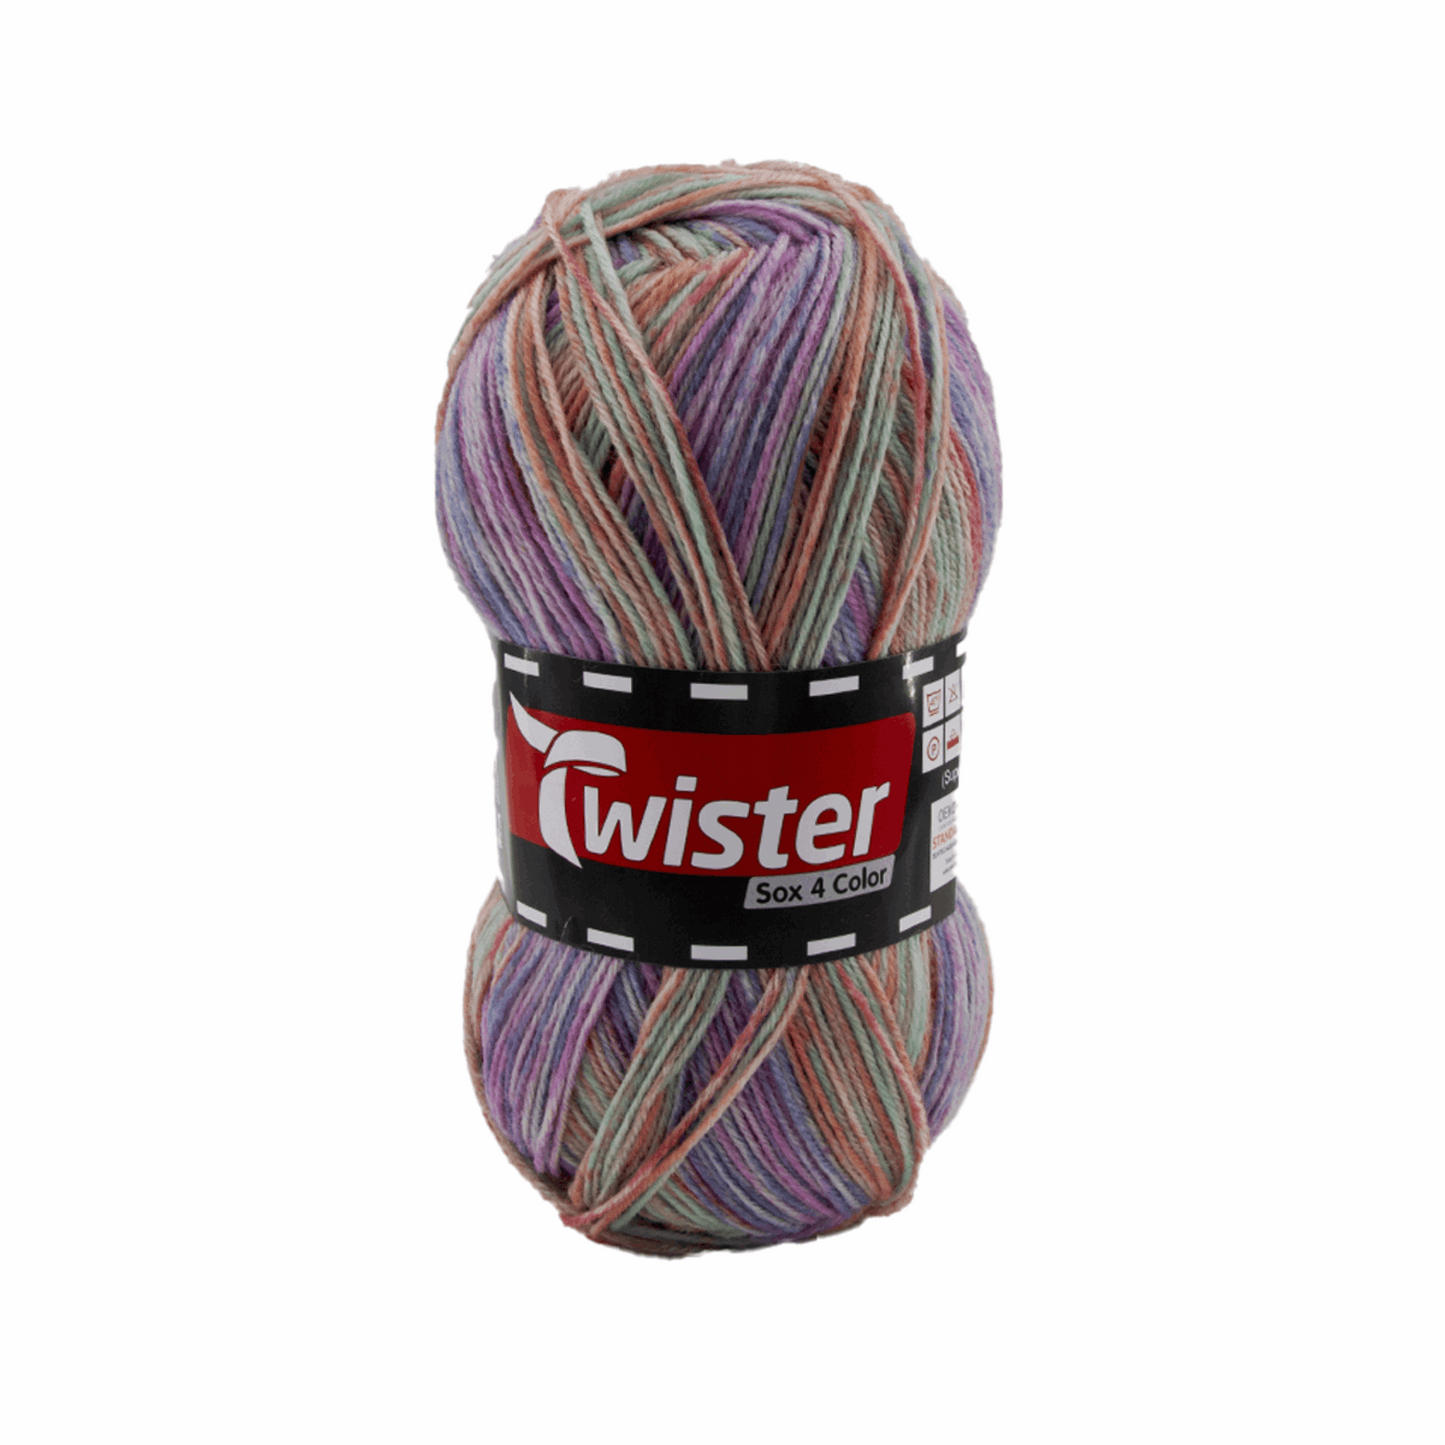 Twister Sox4 Color superwash, kolibrie color, 98306, color 146